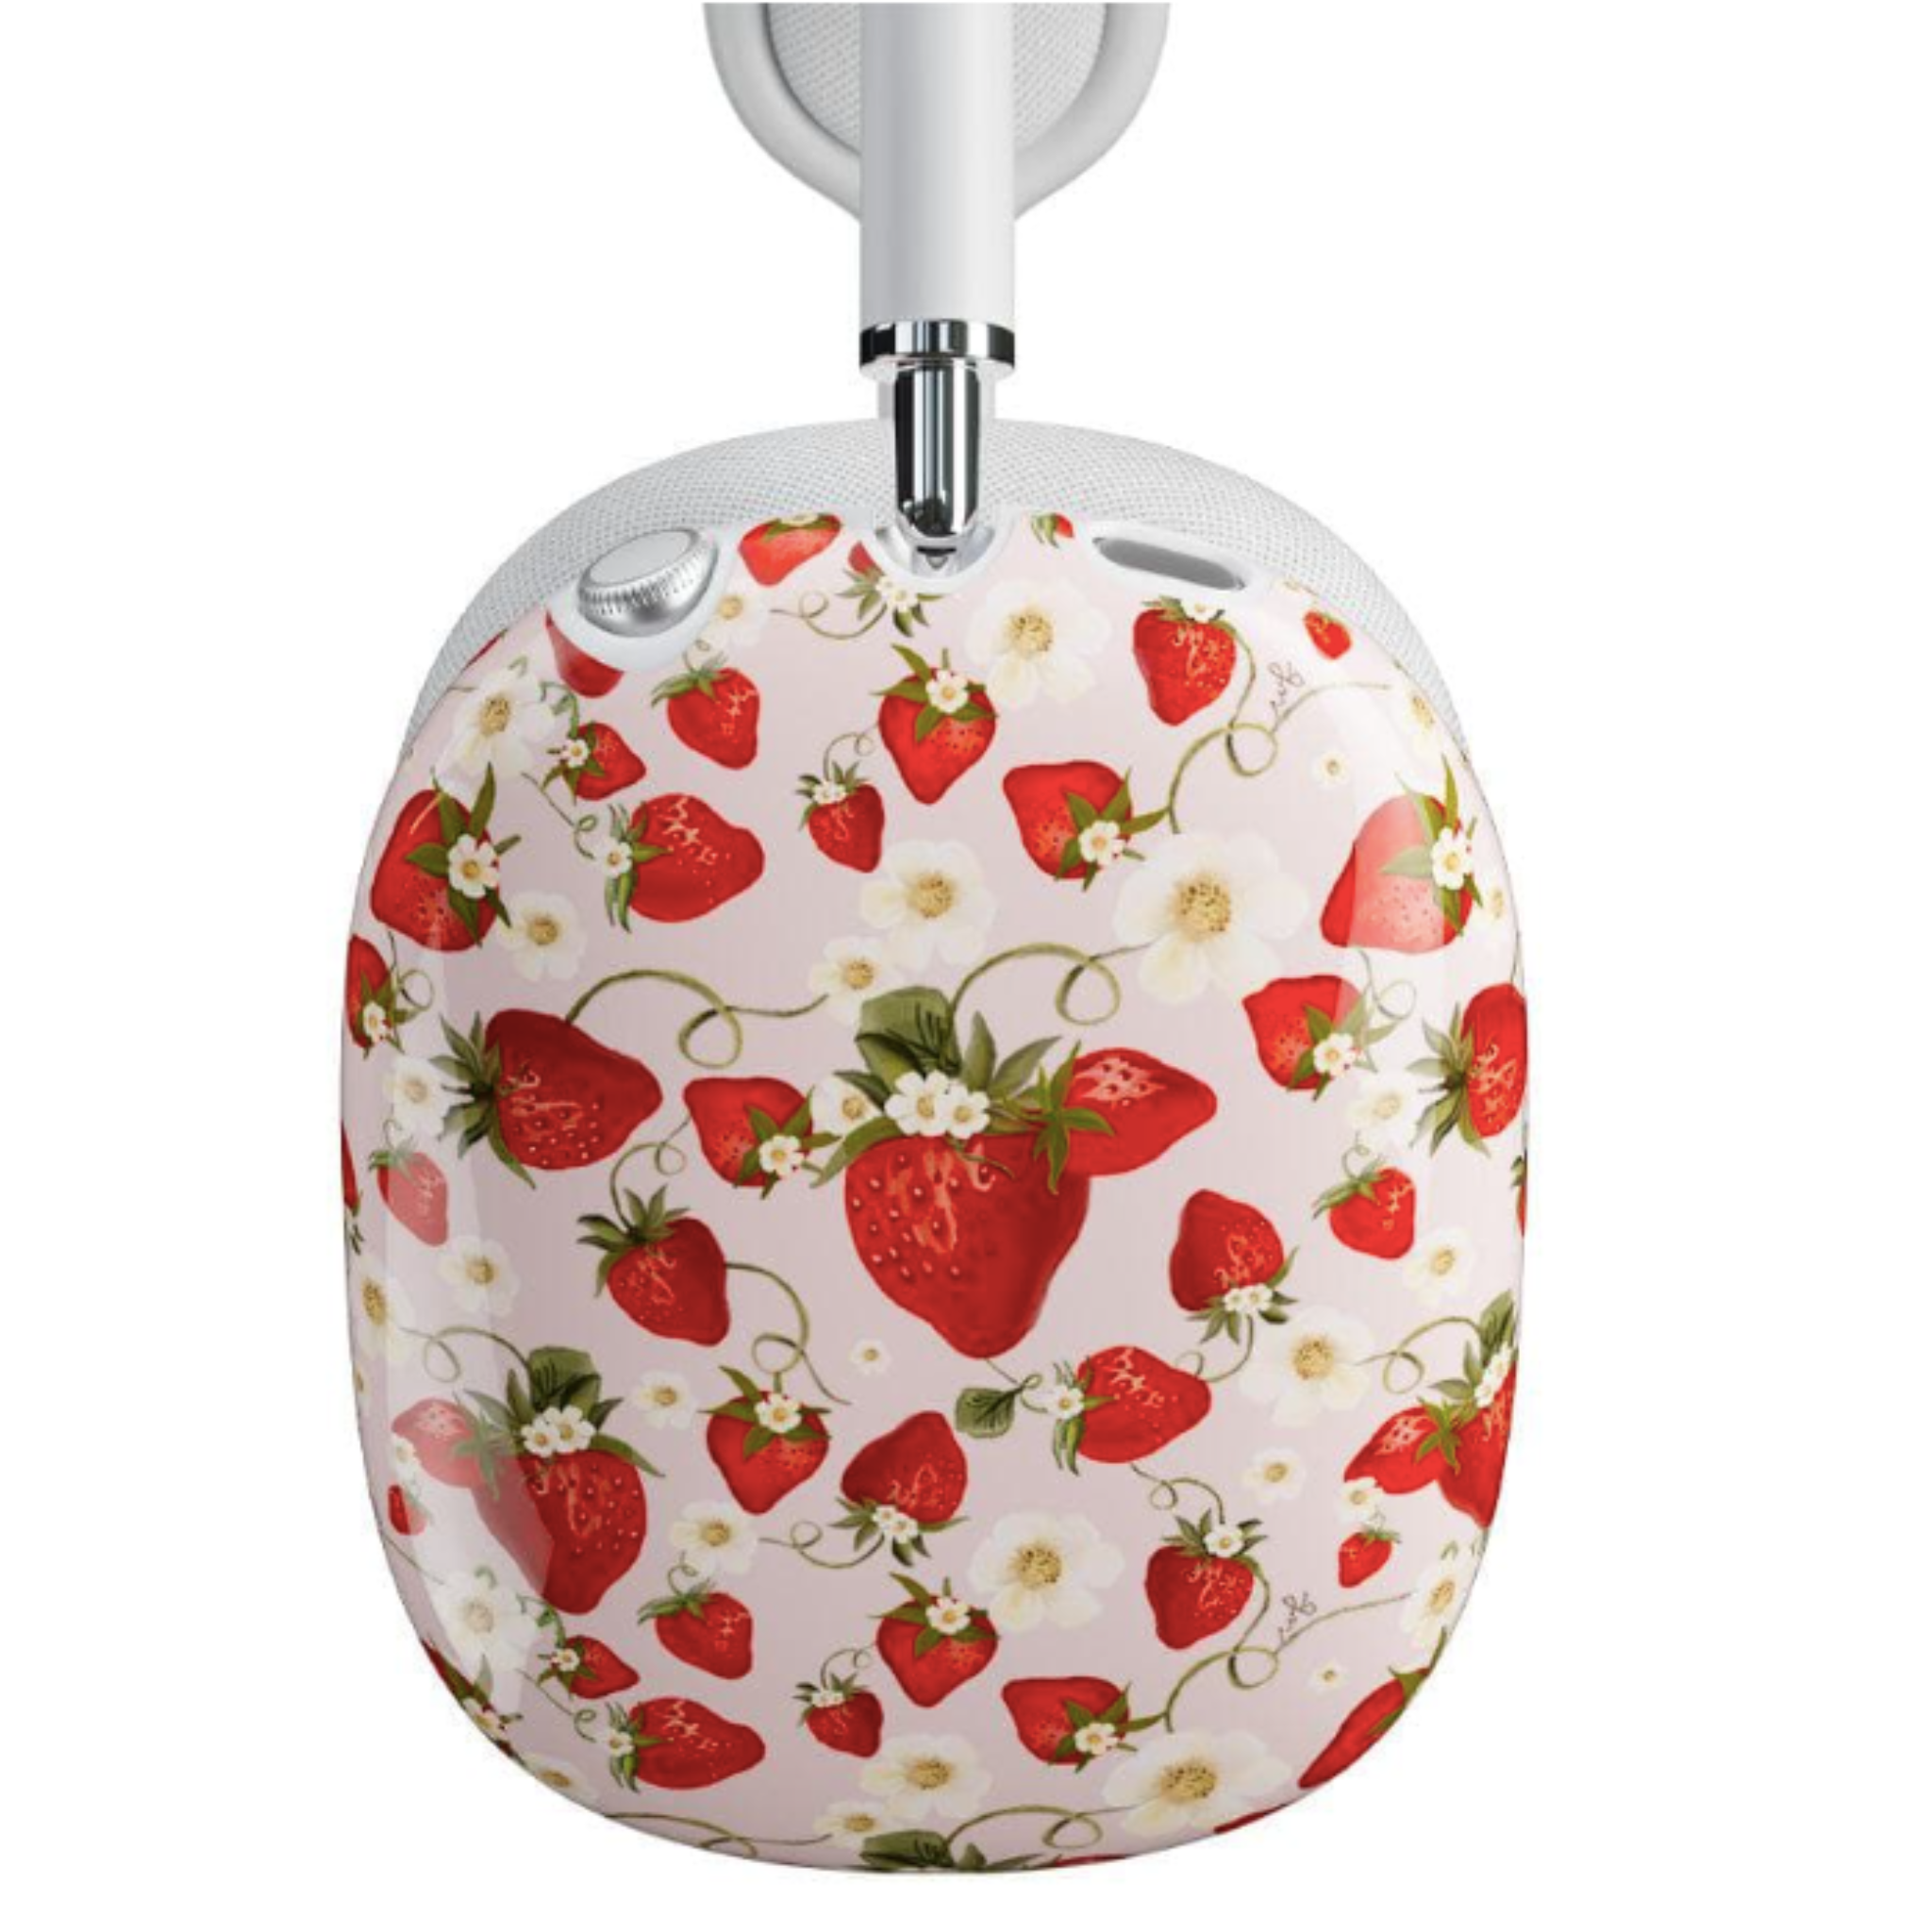 Strawberry Fields Airpod Max Case